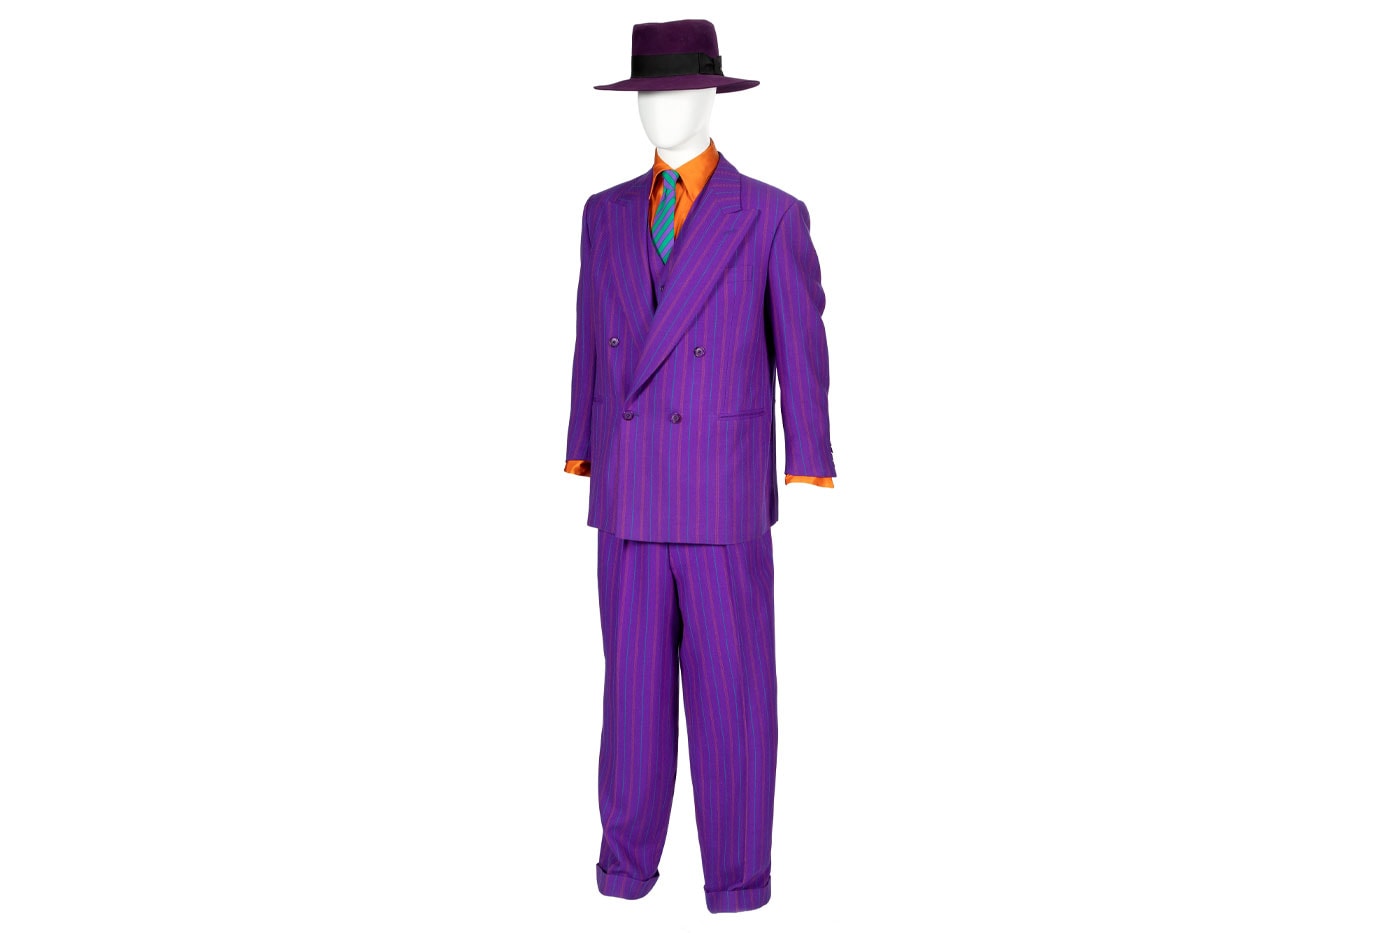 Jack Nicholson tim burton Batman purple Joker Suit auction 60 000 usd opening bid